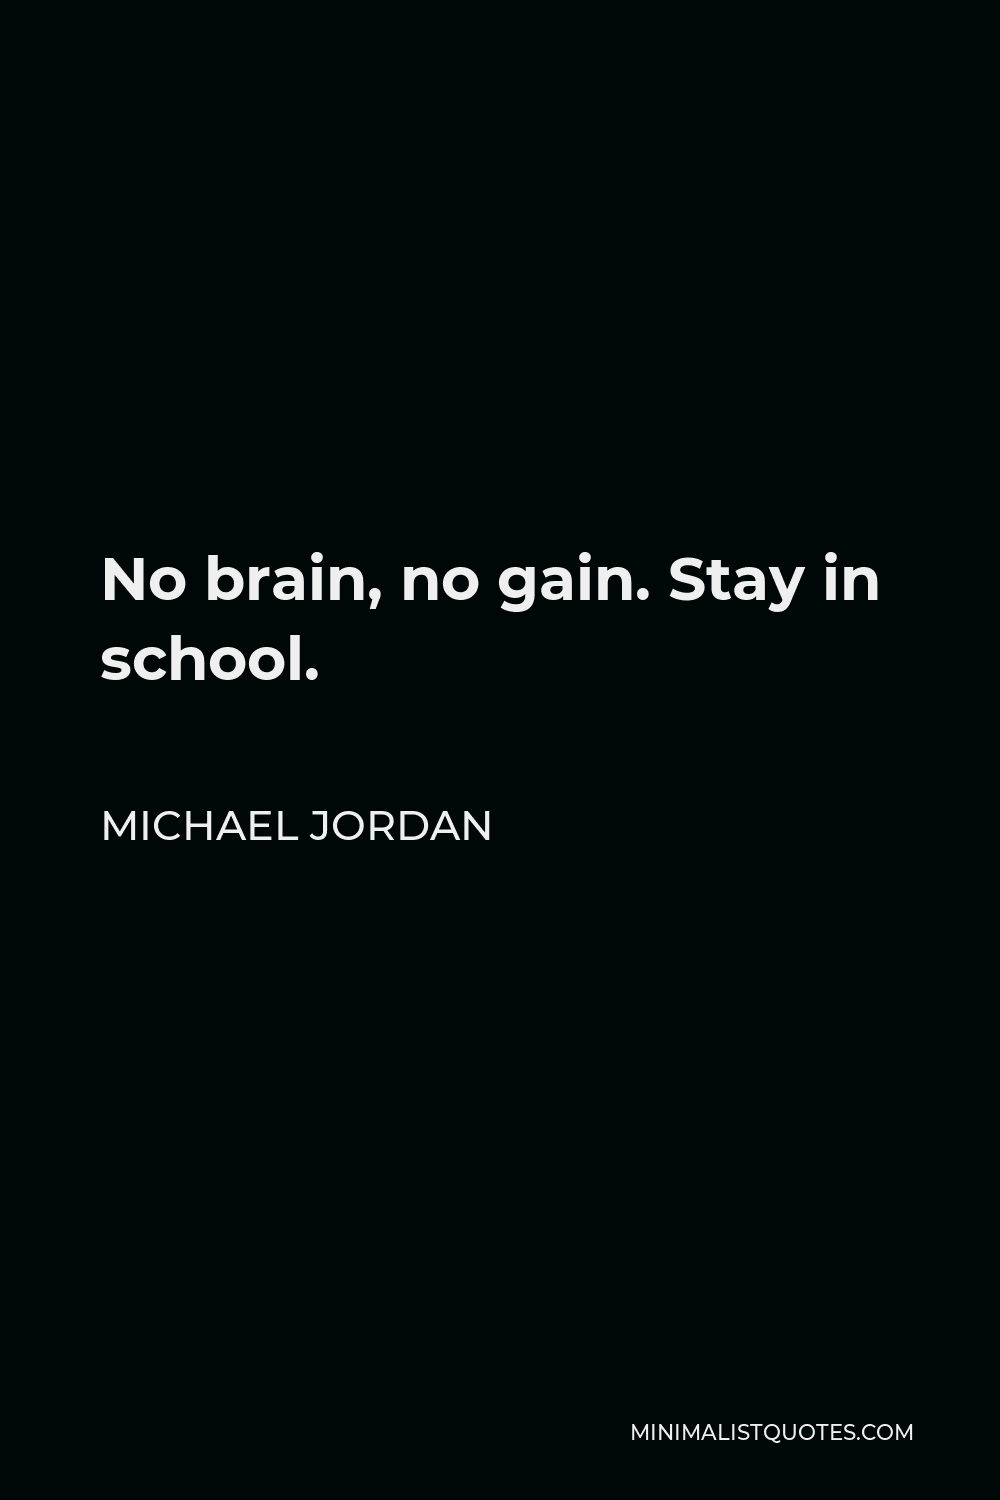 Michael Jordan Quote - No brain, no gain. Stay in school.